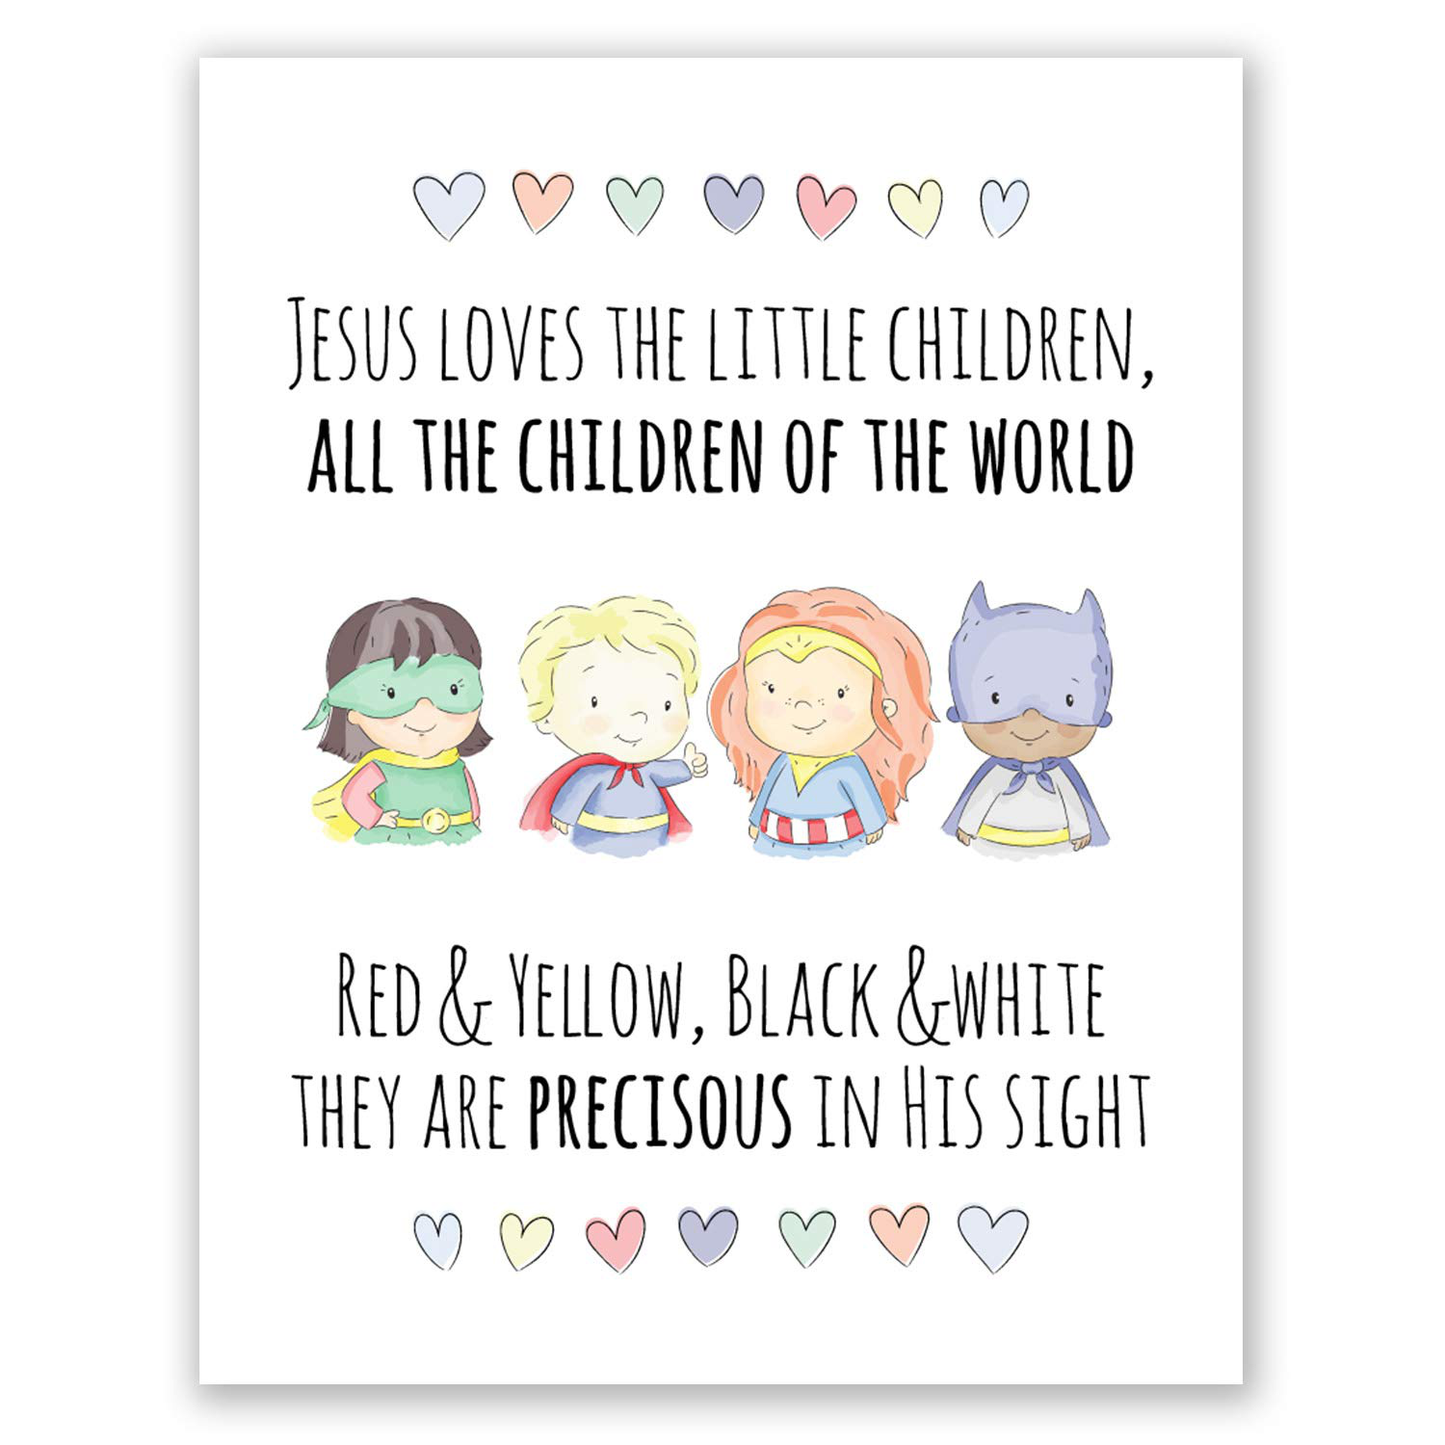 8x10 Jesus Loves The Little Children Wall Art Poster // Childrens Church Decor // Superhero Print // Christian Wall Art Decor // Sunday School Art Picture // Kids Worship